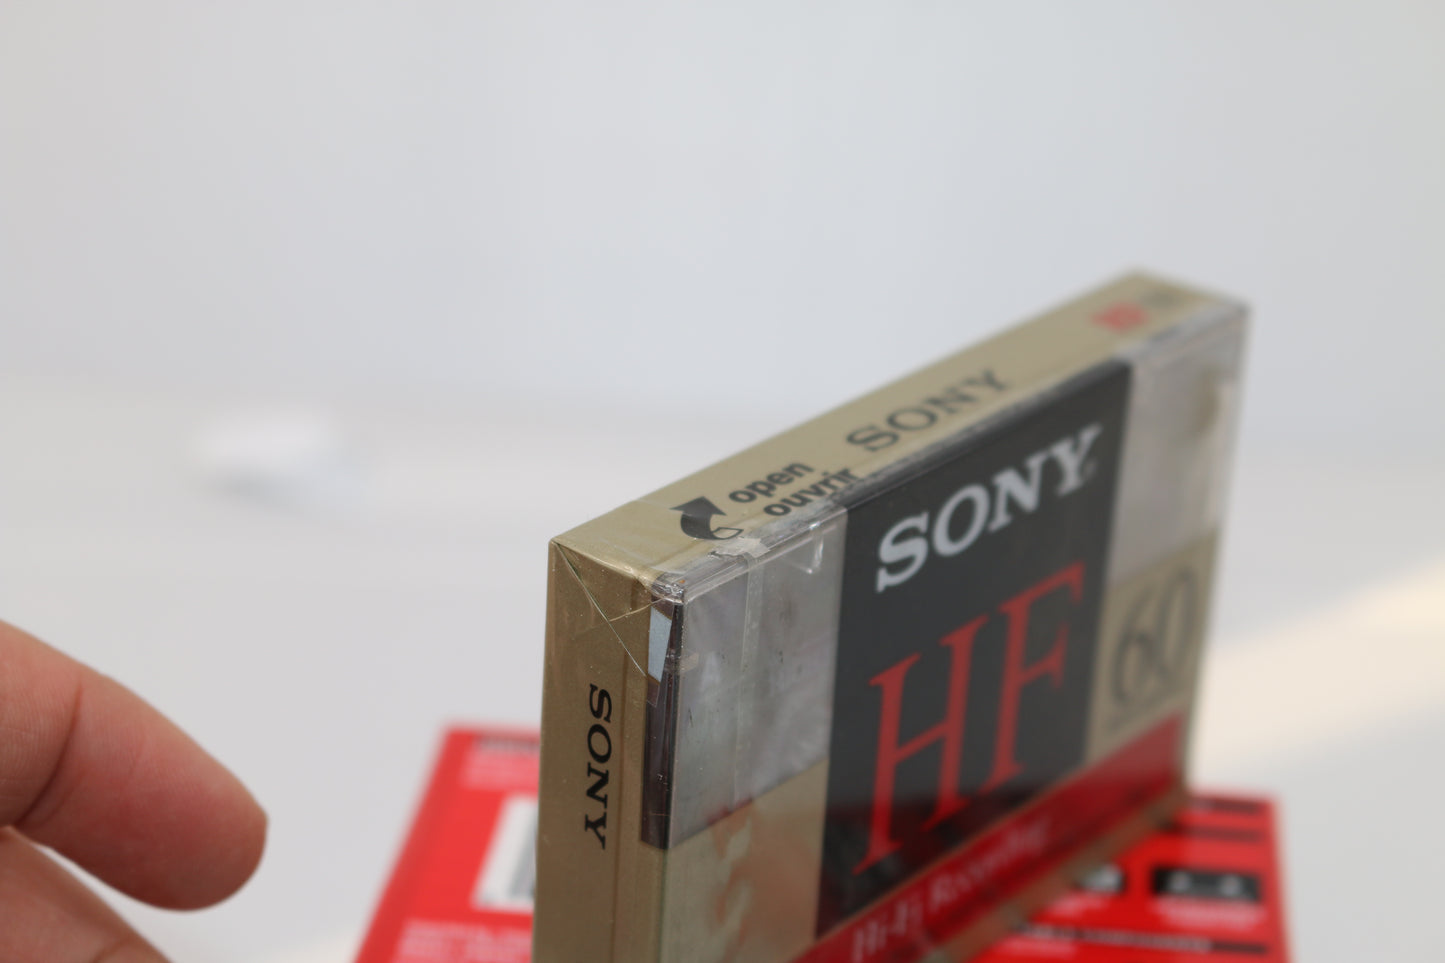 5 Sony 60 Min Mixed lot Blank Audio Cassette Tape Sealed TDK Sony MAXELL